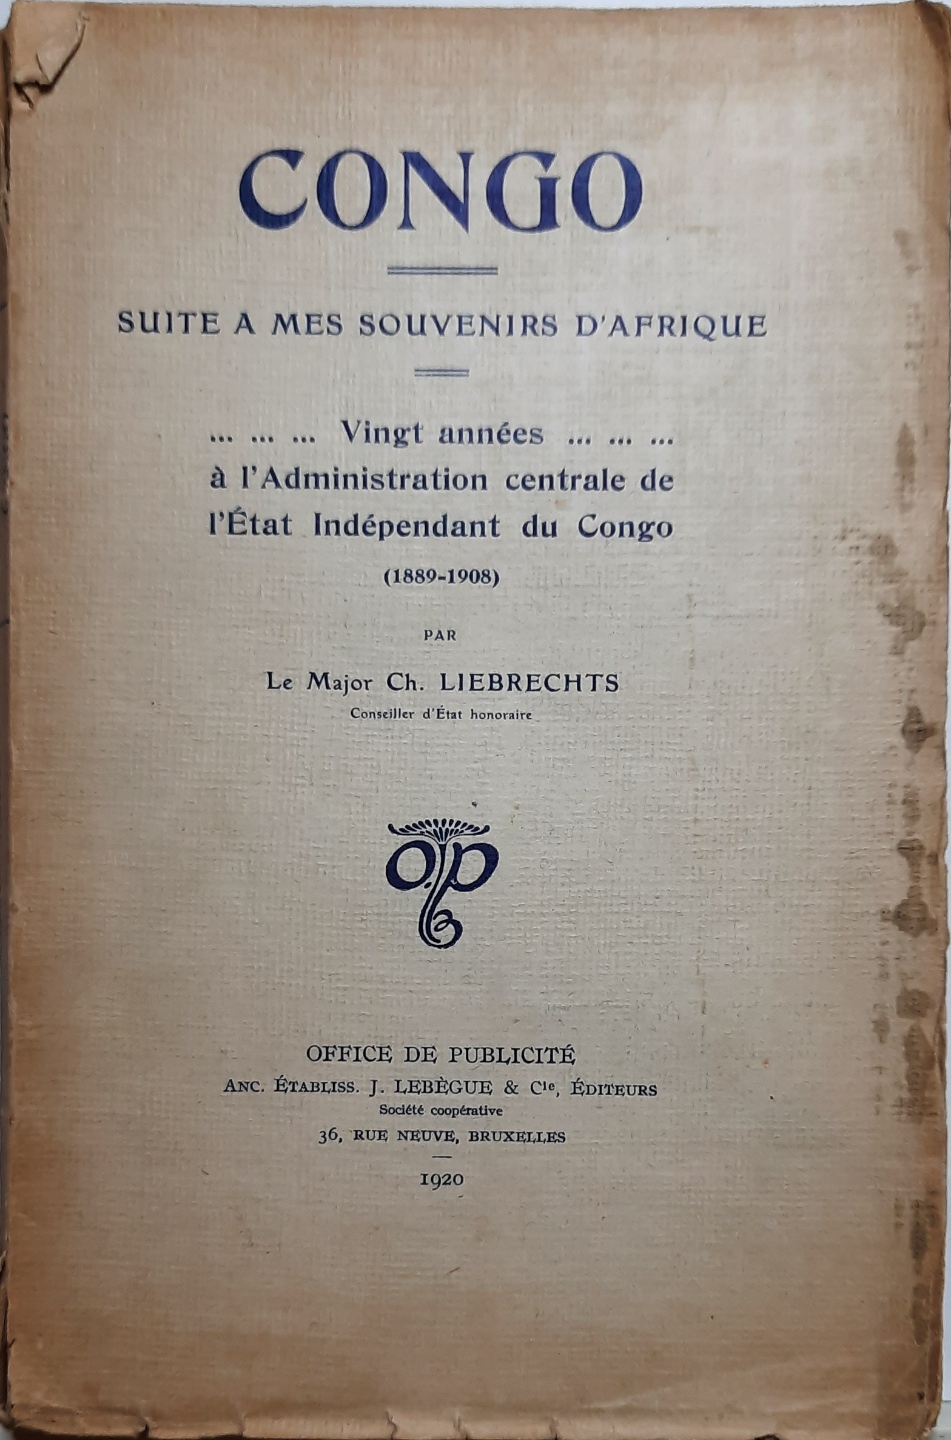 Book cover 202106300132: LIEBRECHTS Ch. le Major, Conseiller d